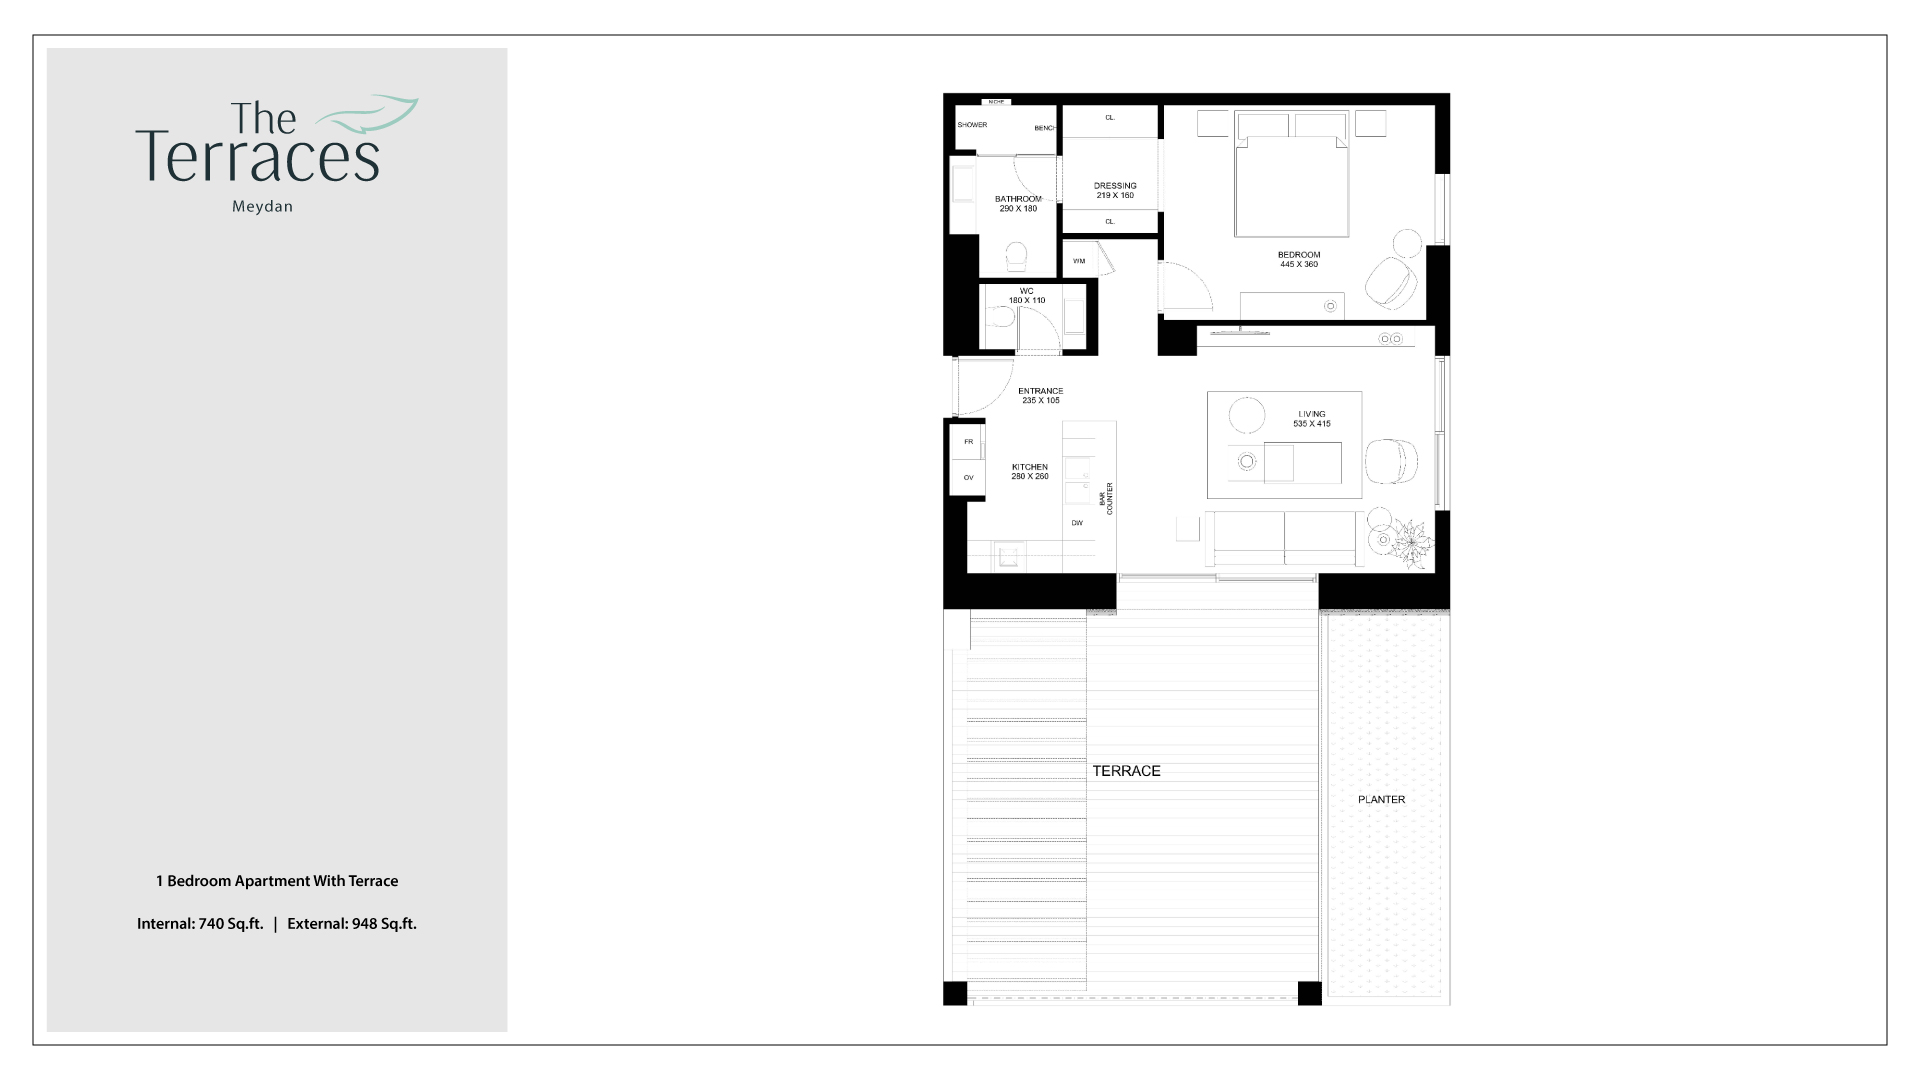  The Terraces 1 Bedroom Apartment With Terrace Floor Plan 